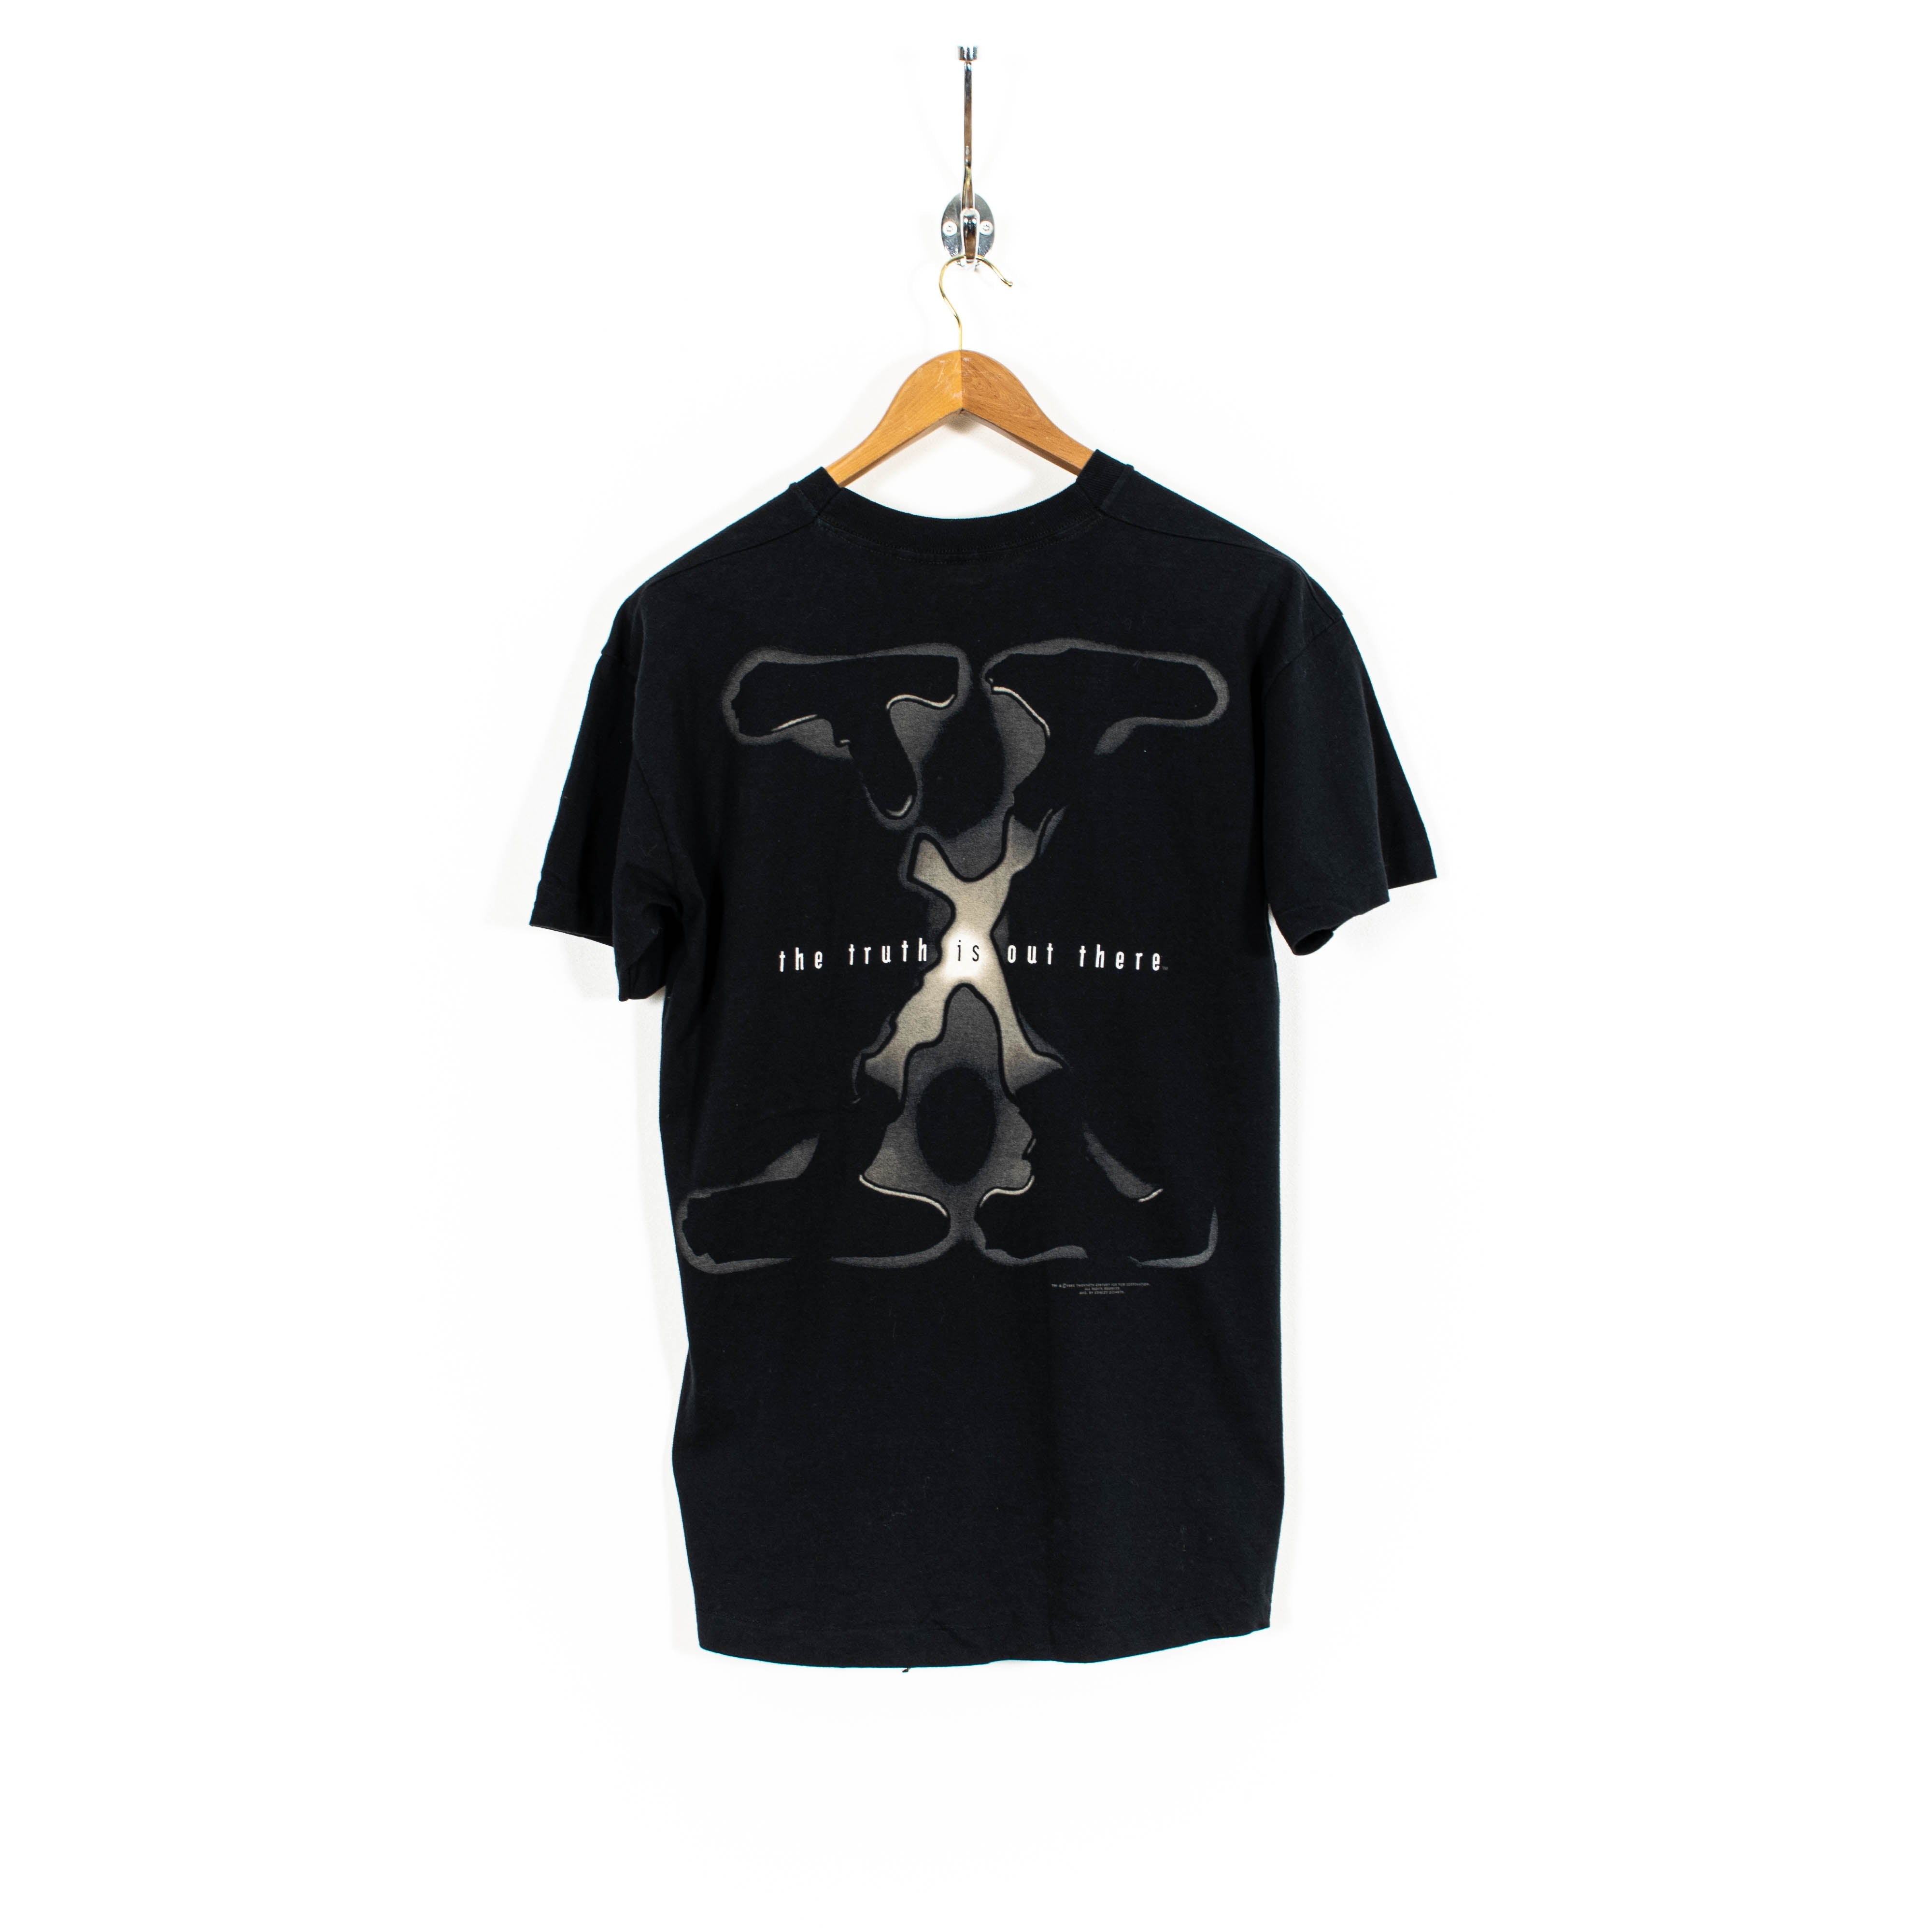 Vintage The X-Files 1995 Black Short Sleeve Shirt Mens S